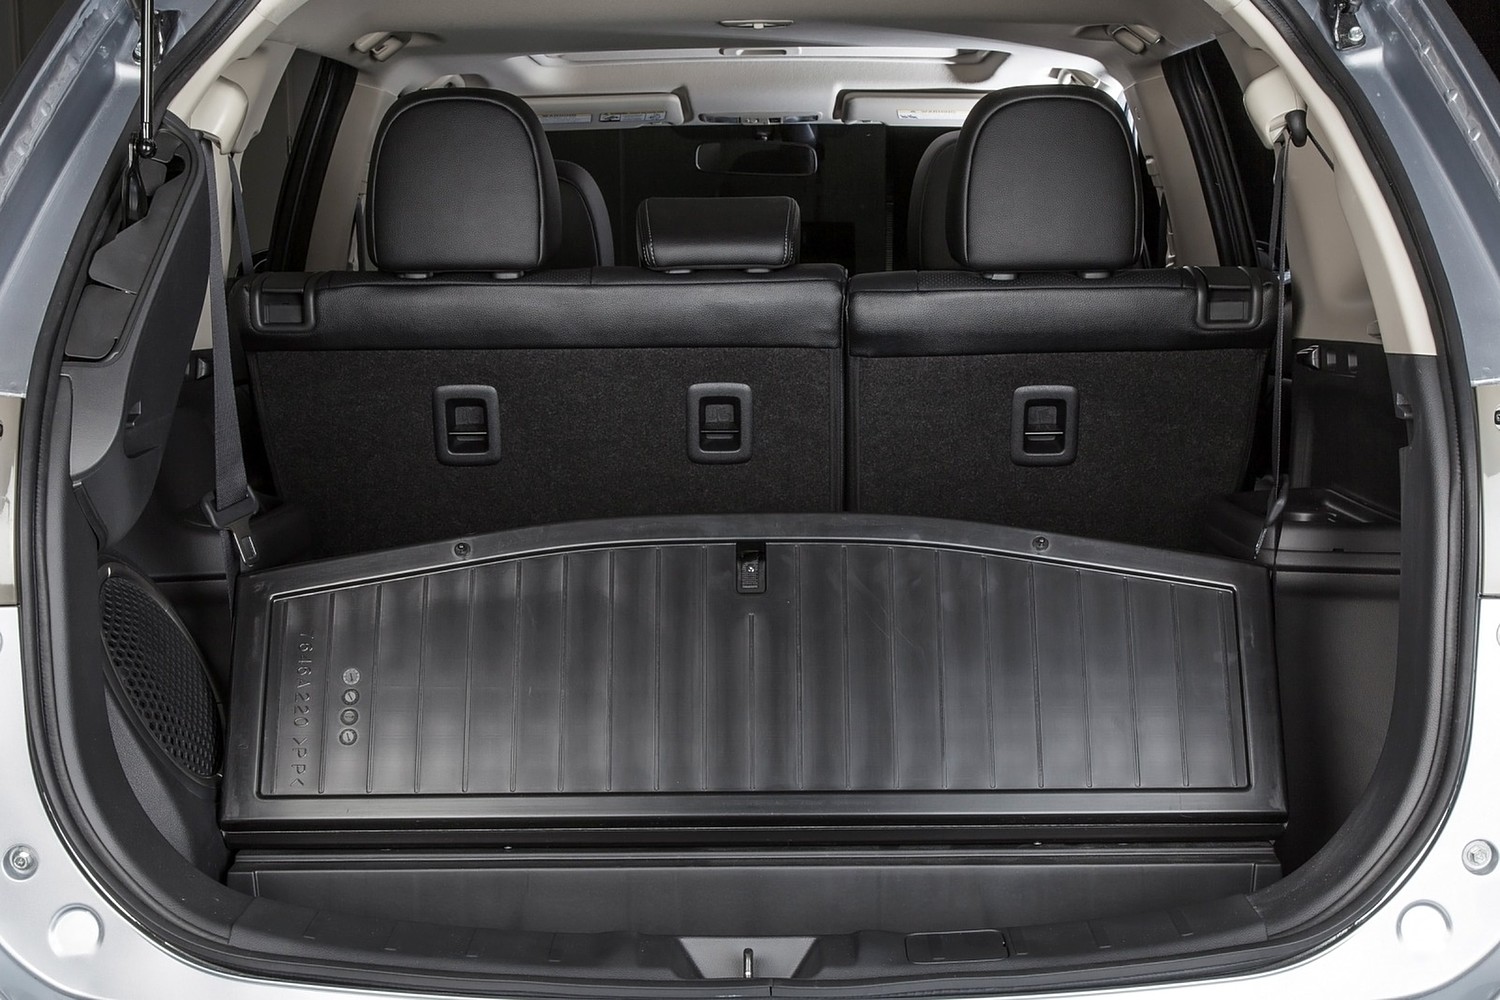 Mitsubishi Outlander GT 4dr SUV Cargo Area (2014 model year shown)